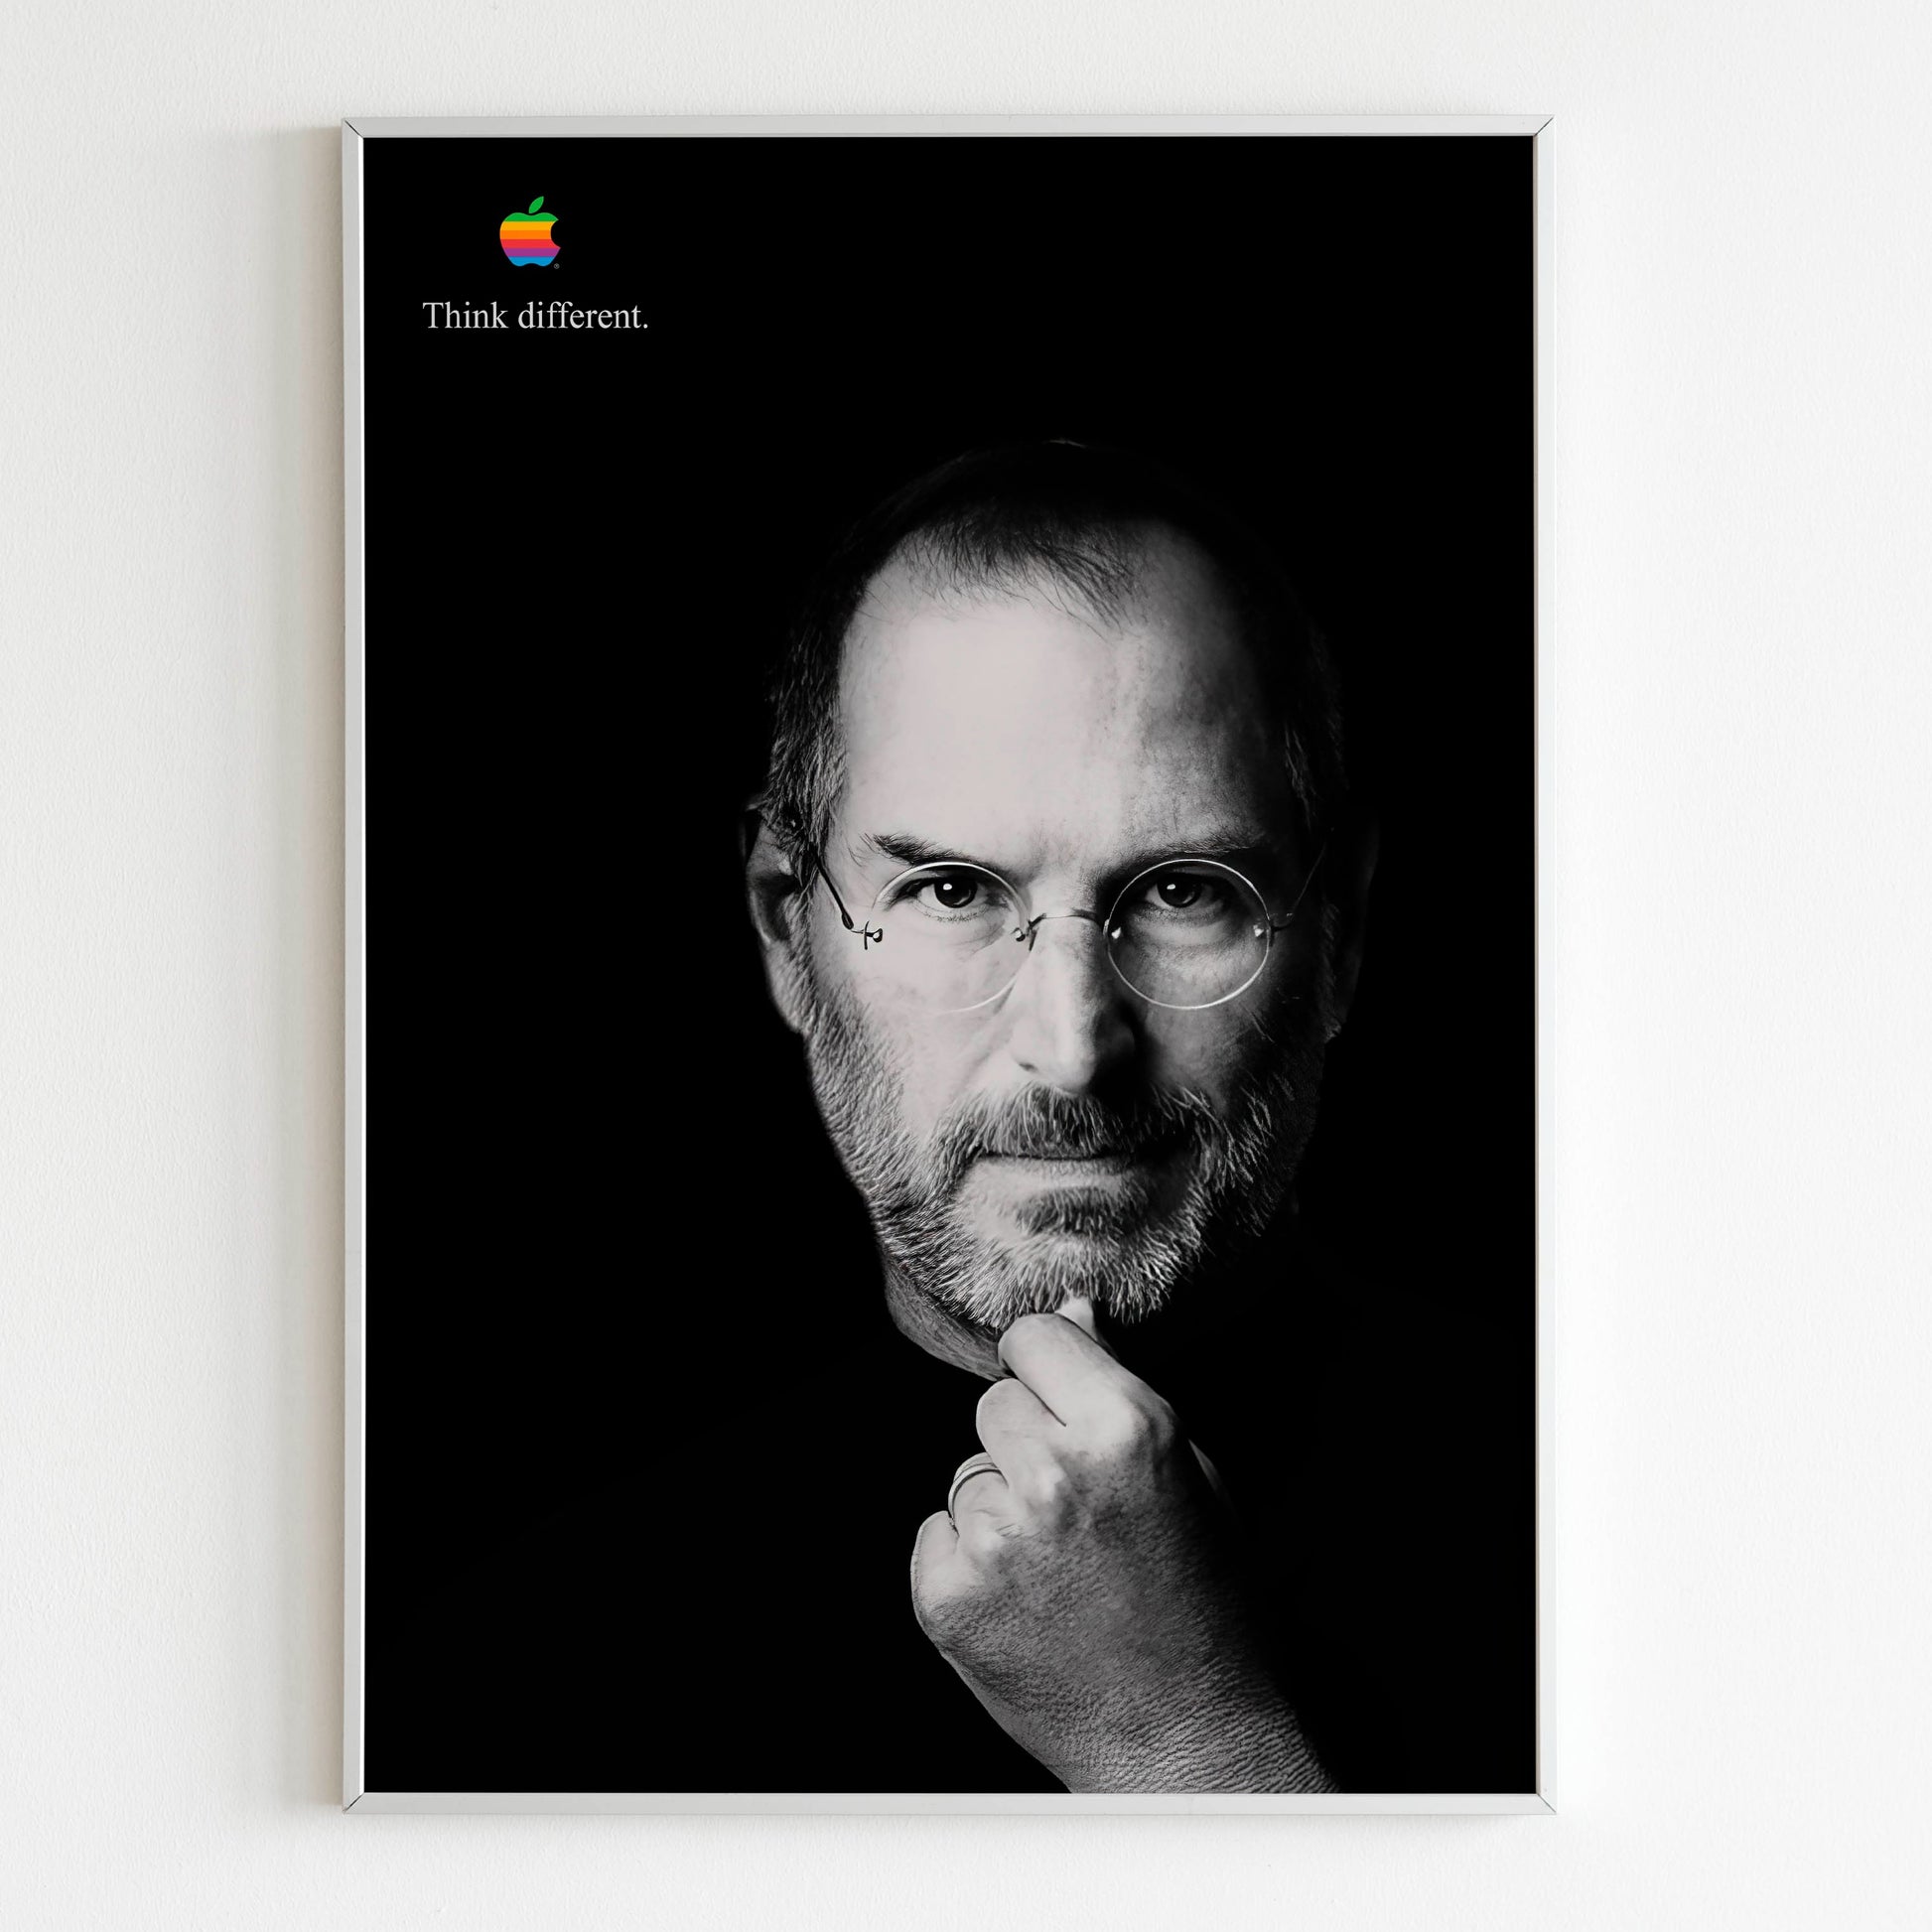 Apple Steve Jobs "Think Different" Advertising Poster, 90s Retro Style Print, Vintage Wall Art, Magazine Retro Advertisement